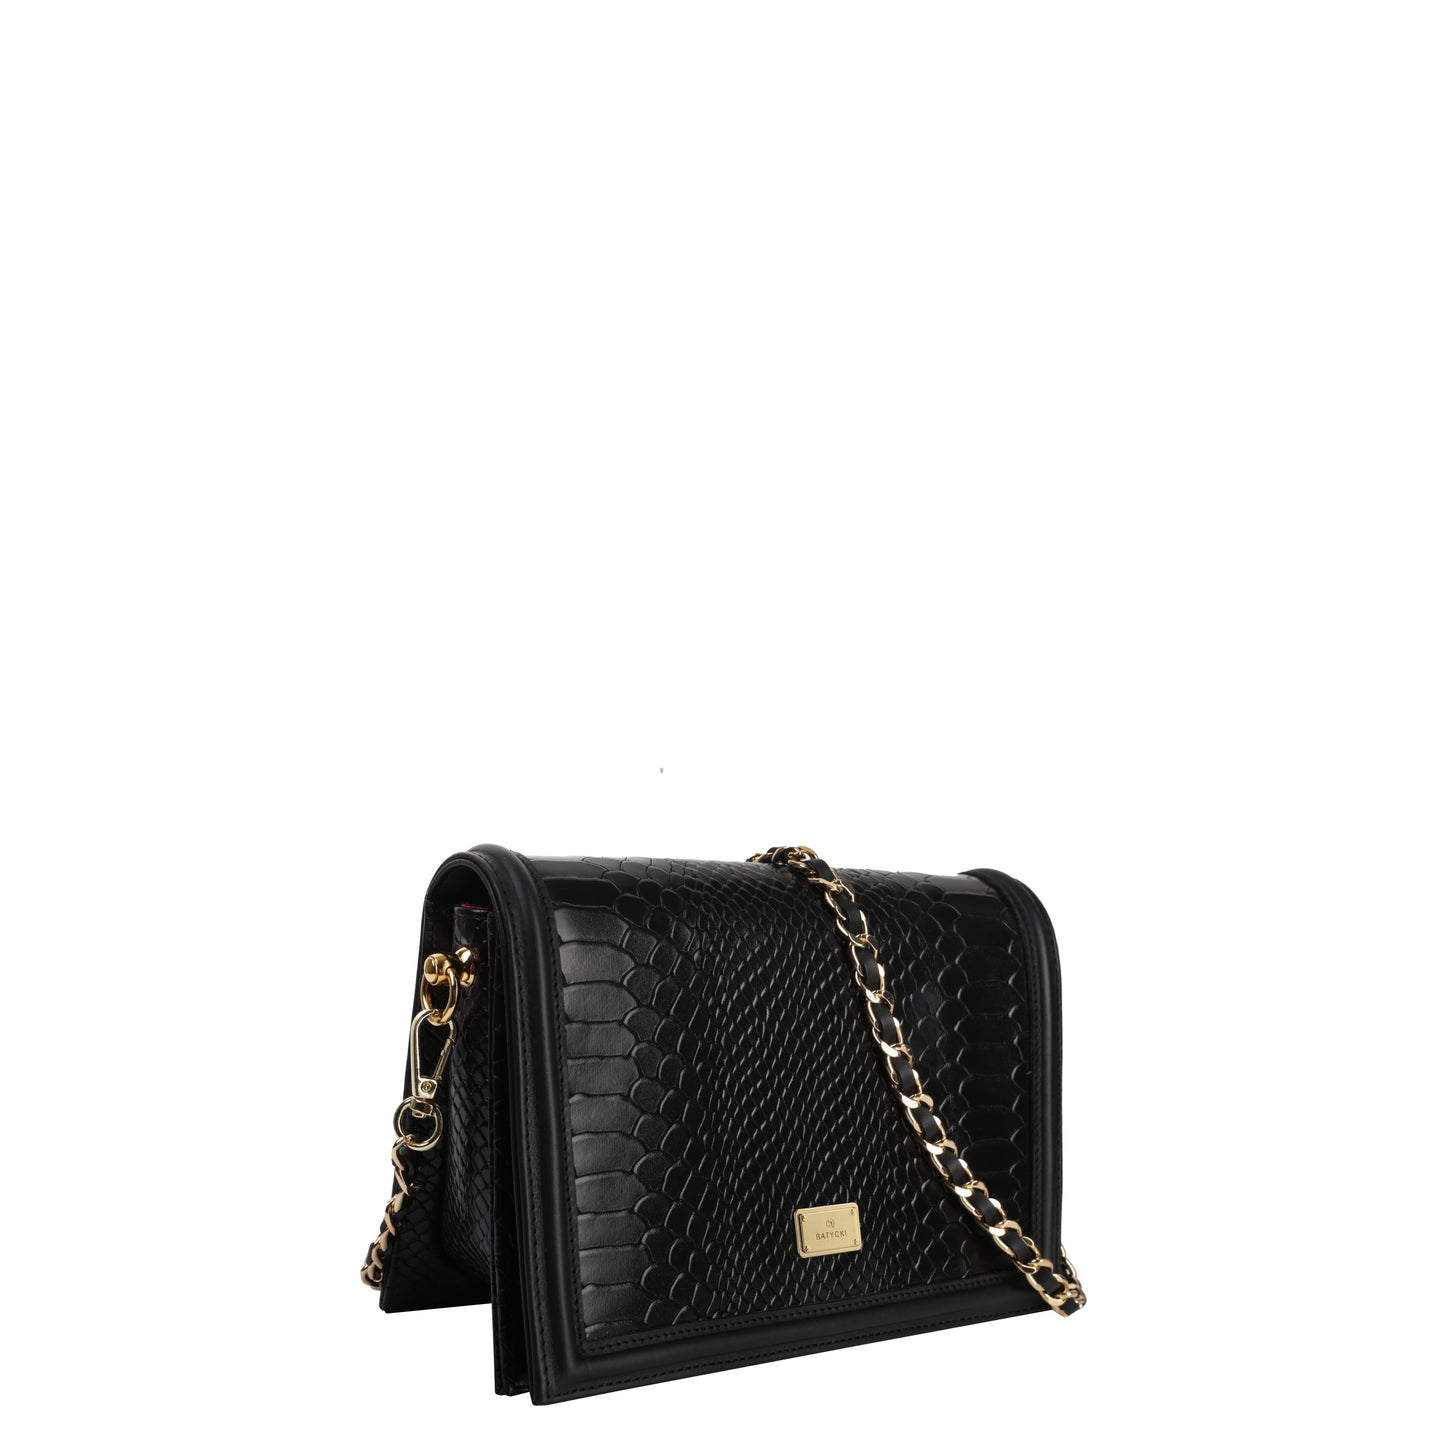 MAYA BLACK leather women's handbag